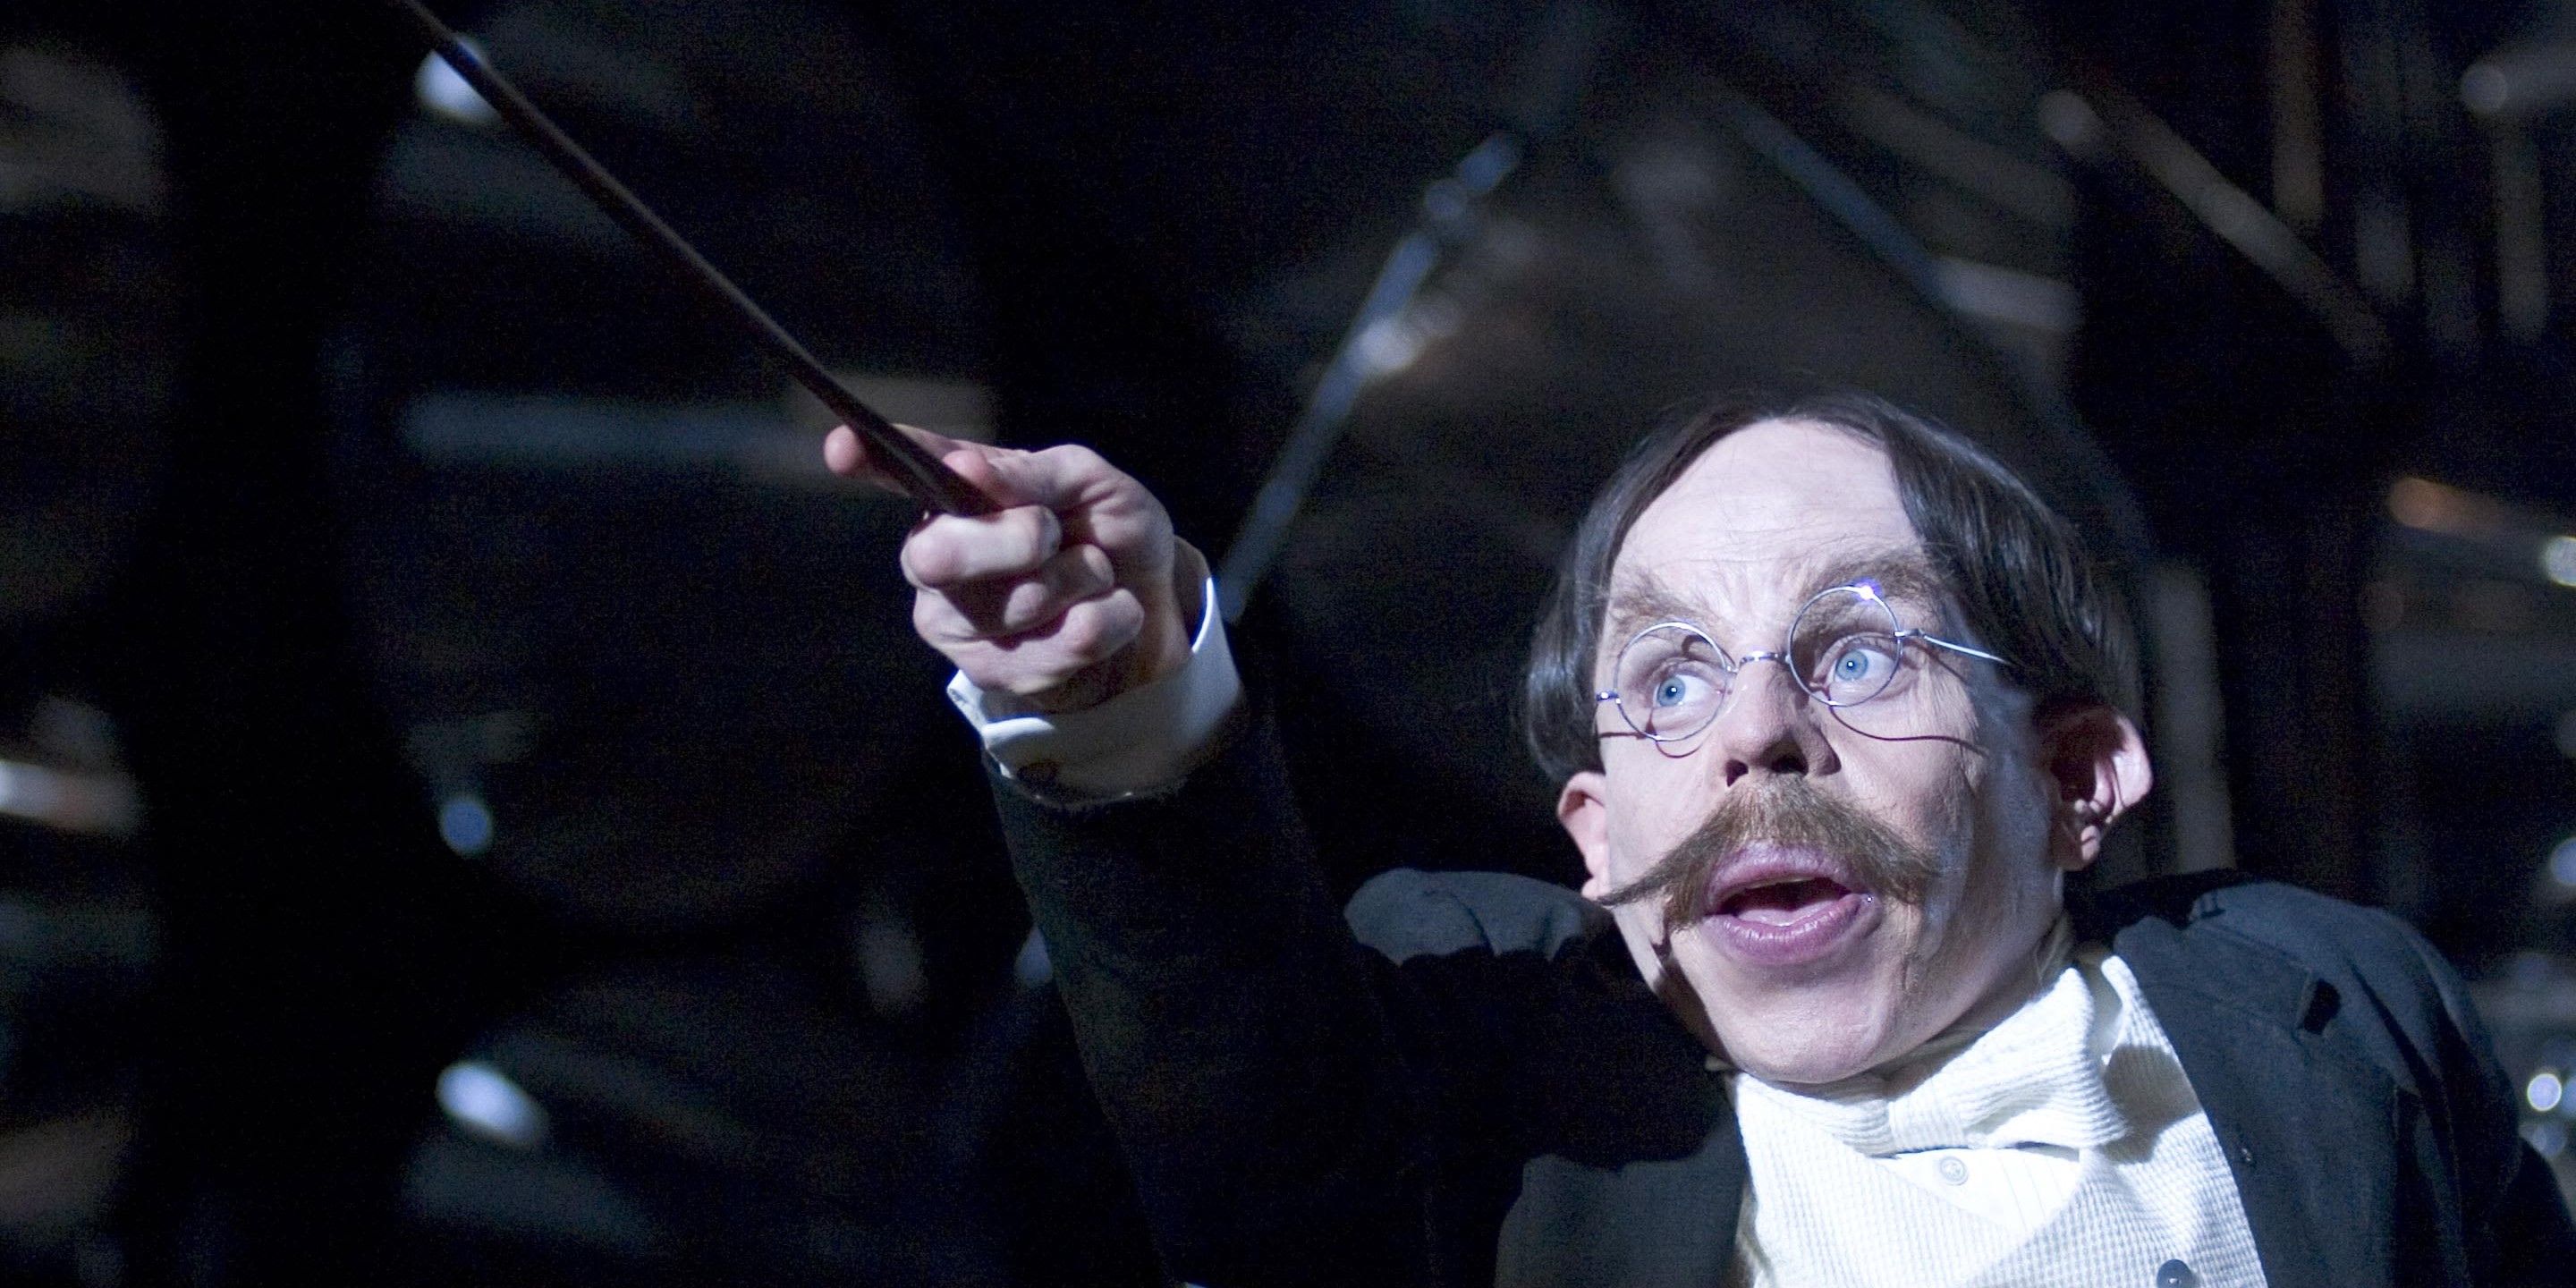 A wizard wielding a wand in Harry Potter.